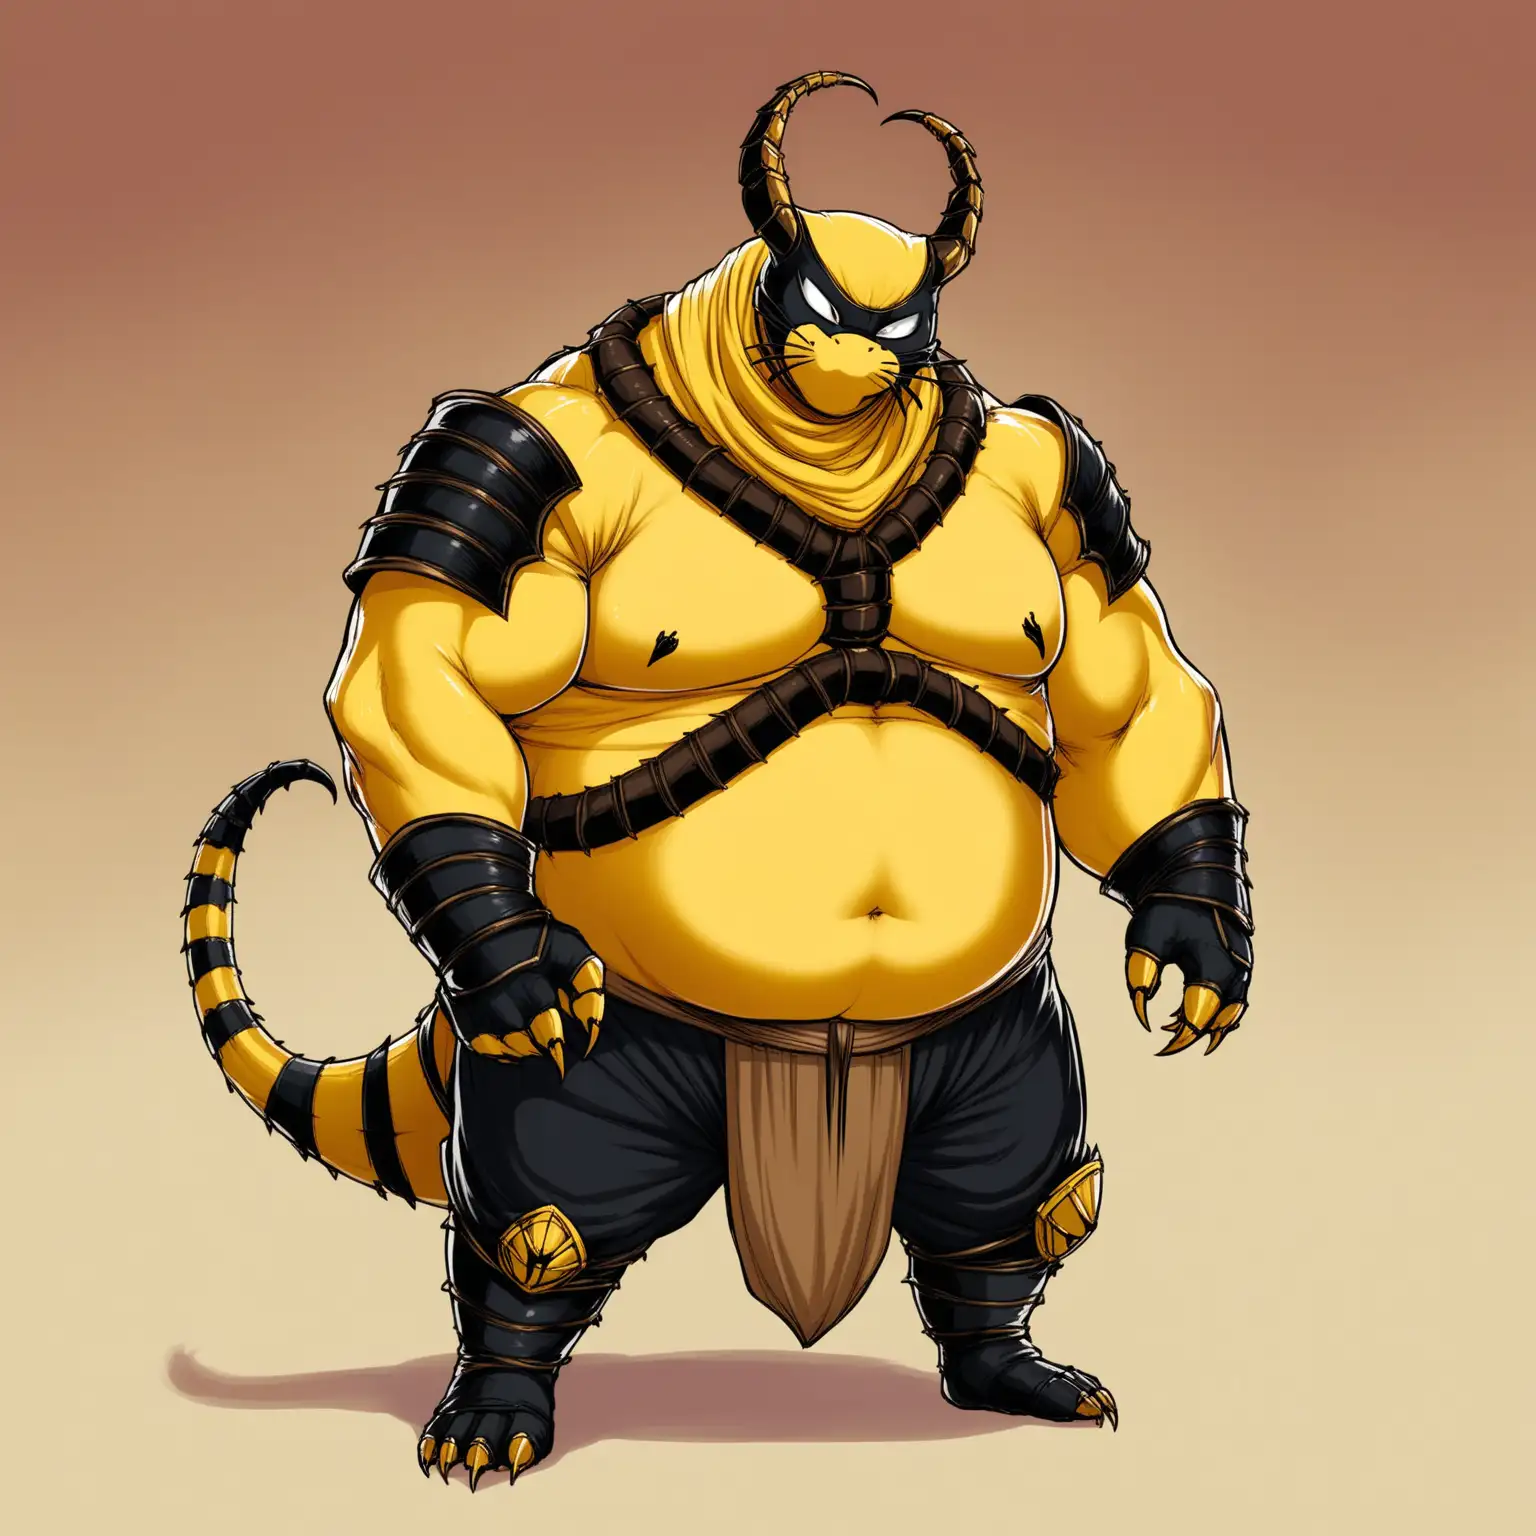 Blonde Fat Catman Warrior Dressed as Scorpion from Mortal Kombat